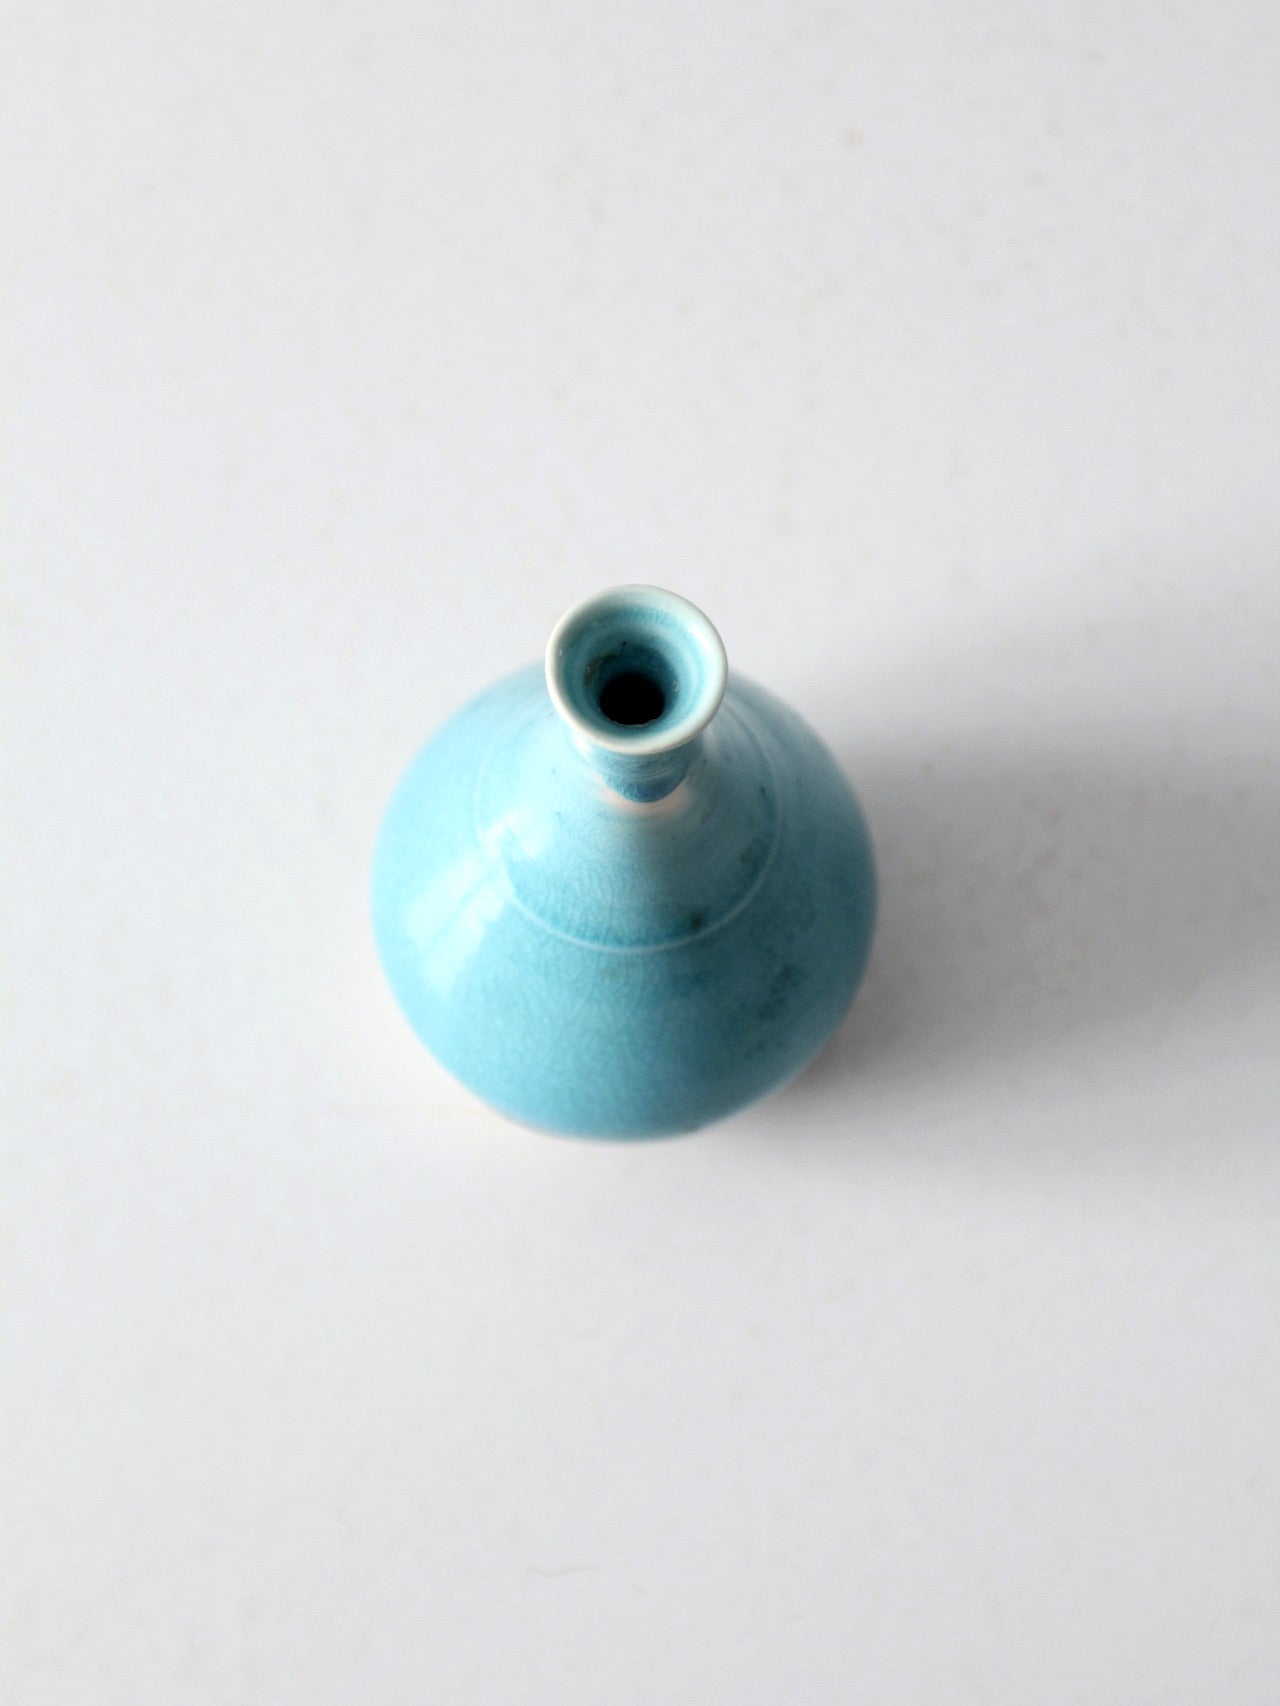 studio pottery bottle neck vase